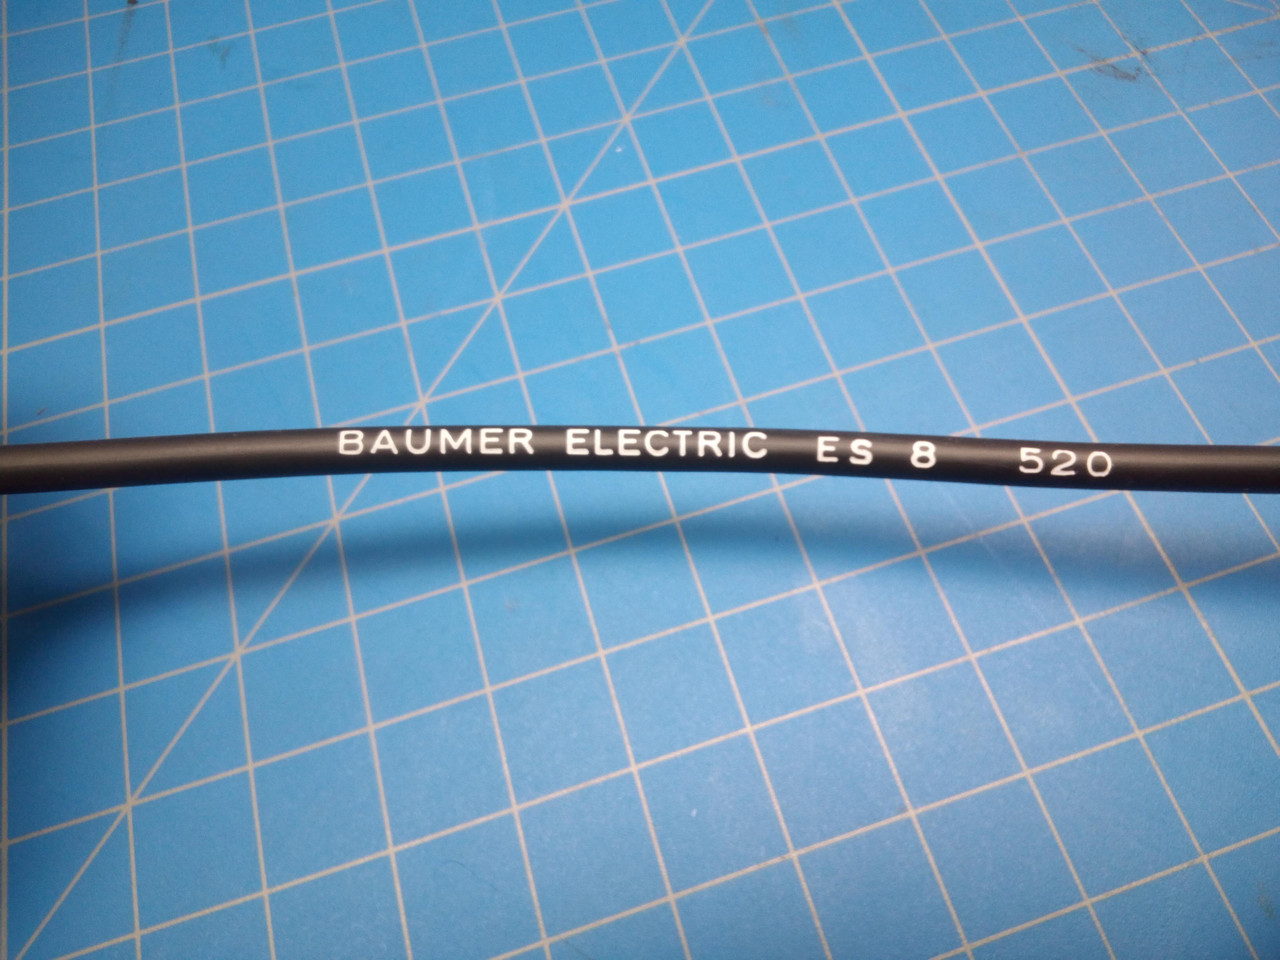 Baumer Electric ES 8 520 - P02-000218